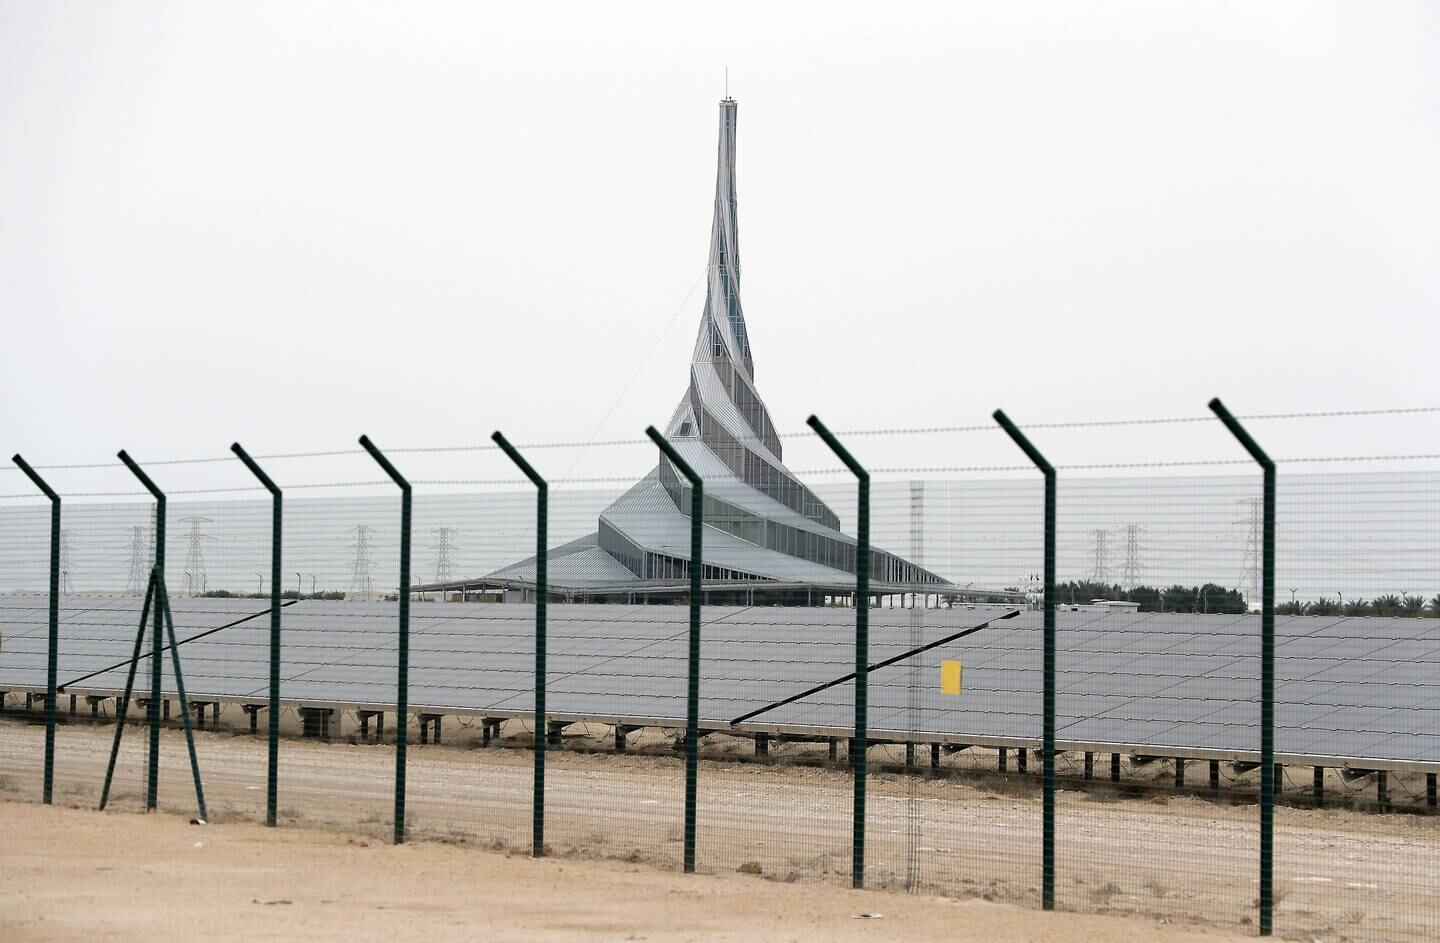 The Innovation Centre at the Mohammed bin Rashid Al Maktoum Solar Park in Dubai. Pawan Singh / The National